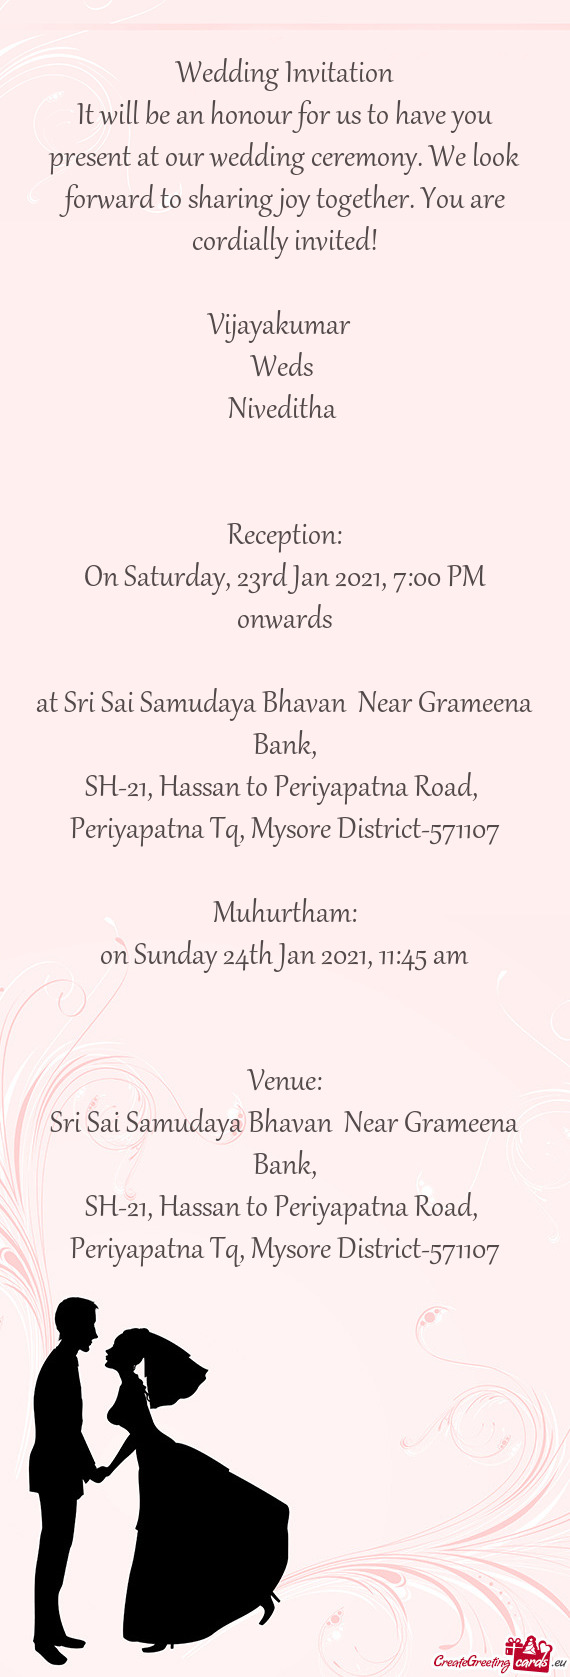 Periyapatna Tq, Mysore District-571107